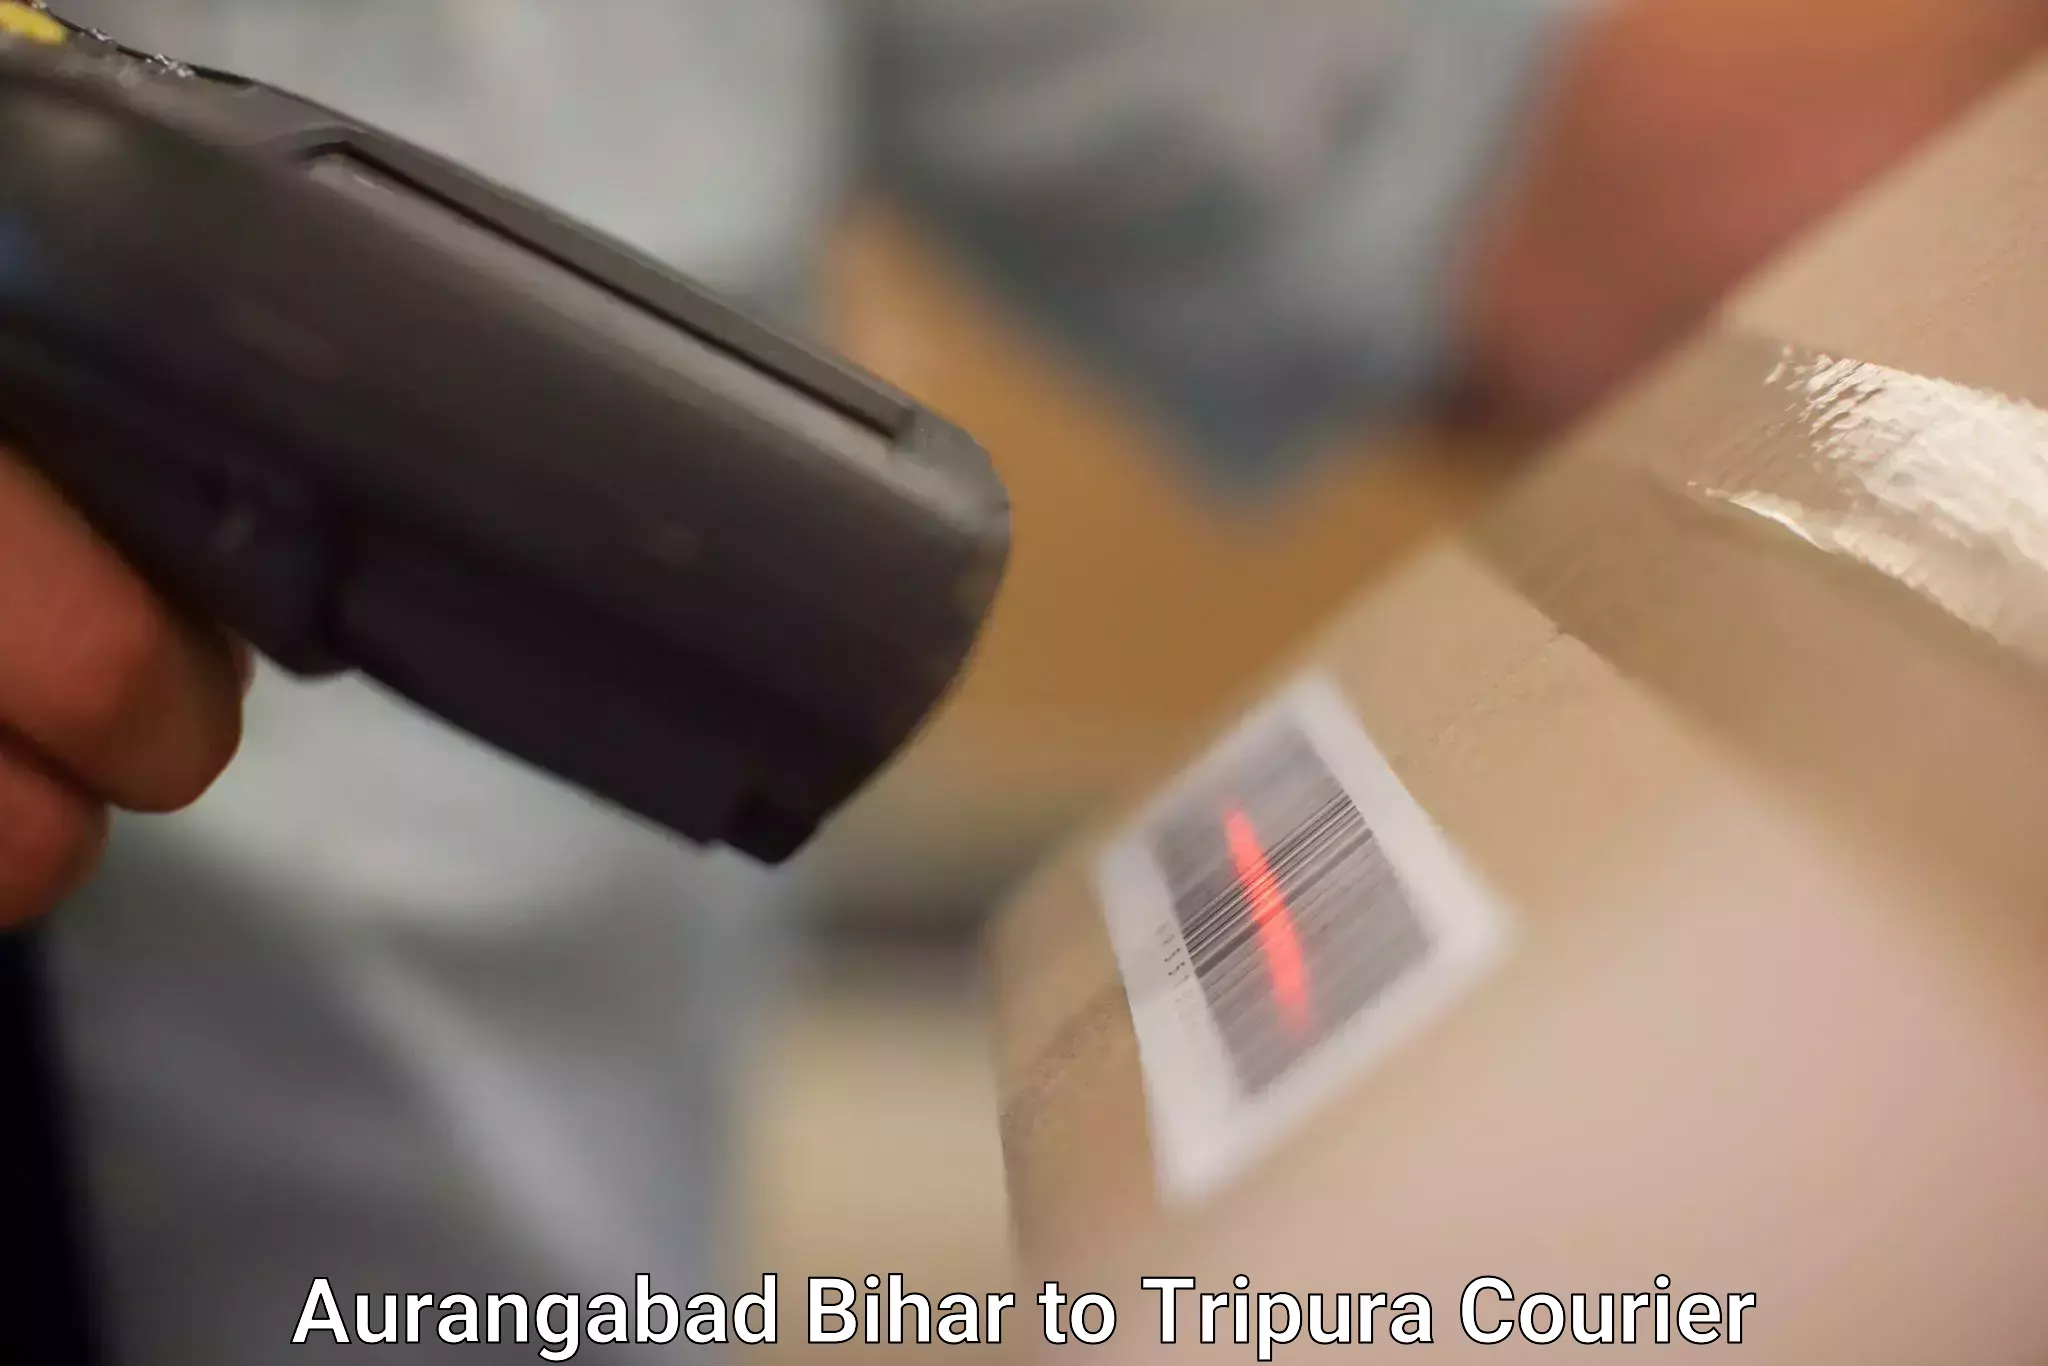 Domestic courier Aurangabad Bihar to Udaipur Tripura